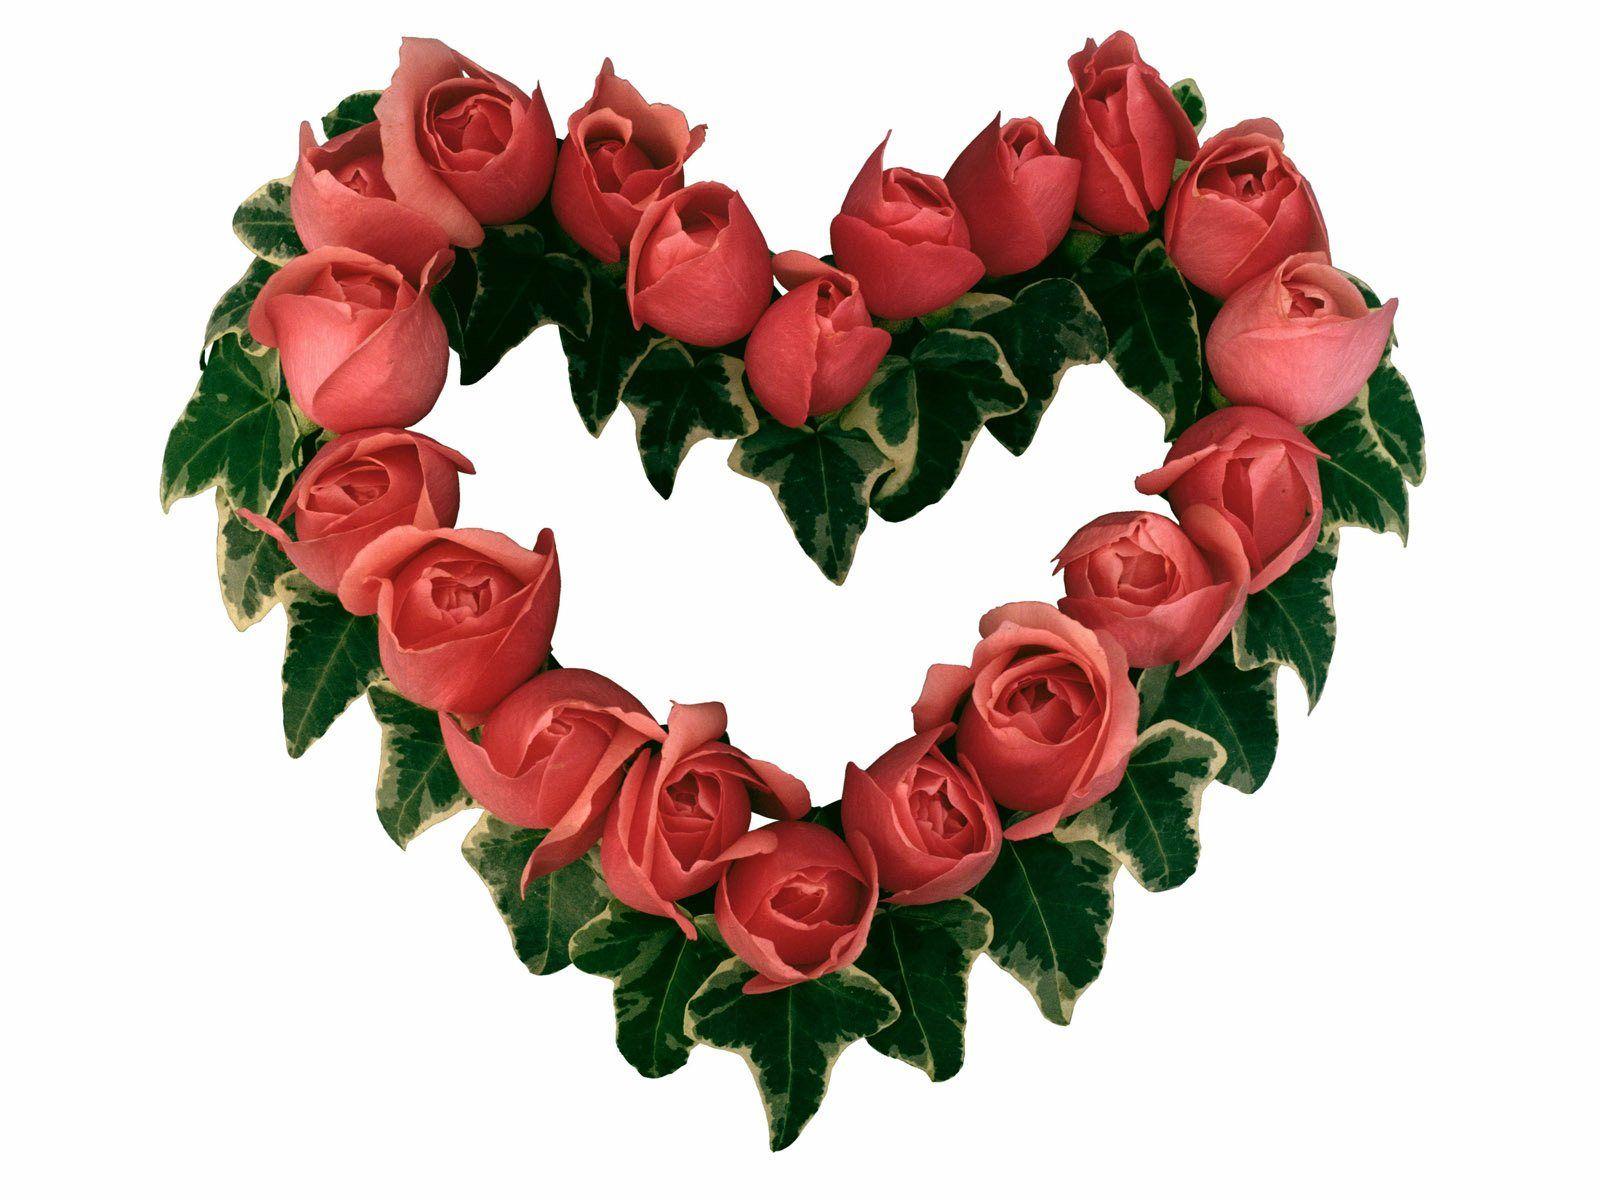 Heart Shape made of Roses widescreen wallpaper. Wide